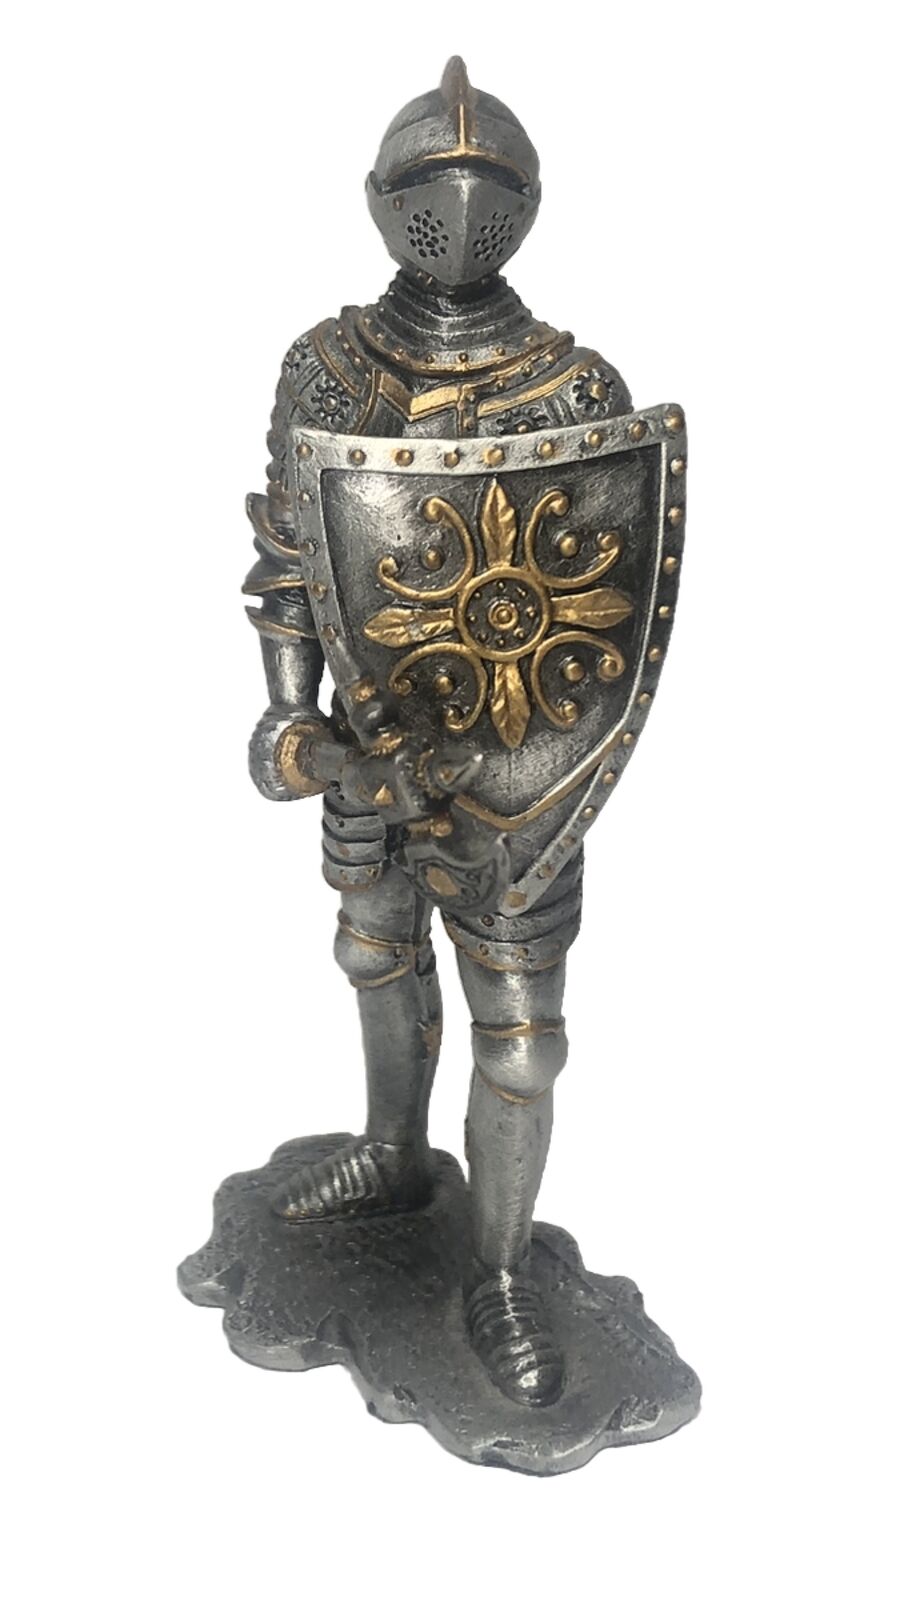 Veronese Medieval Knight Crusader Axe & Armor Pewter 4” Miniature Statue Figure